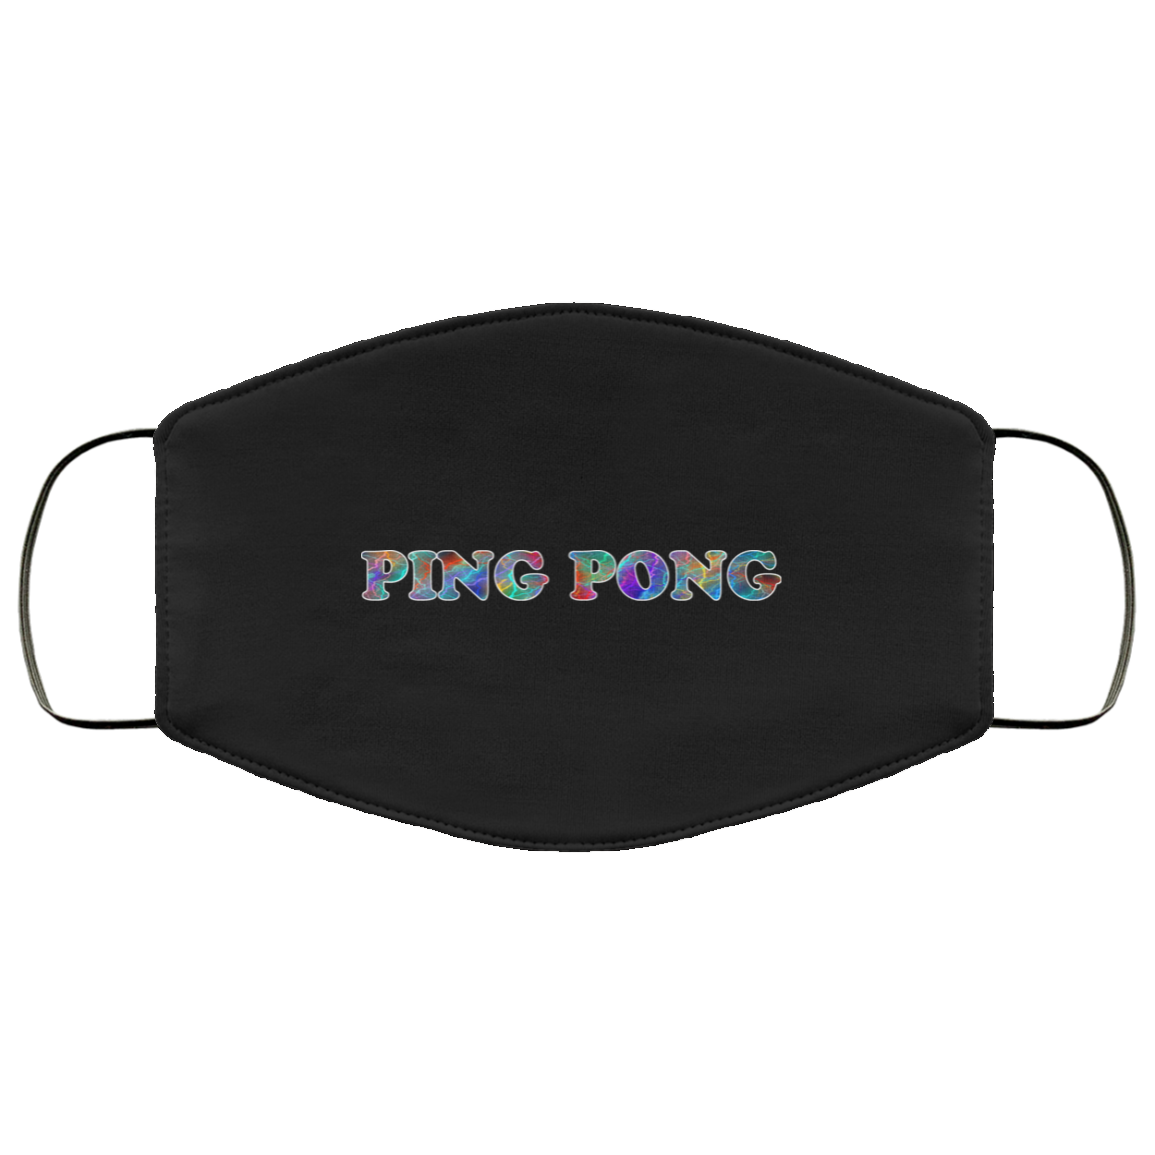 Ping Pong 2 Layer Protective Mask